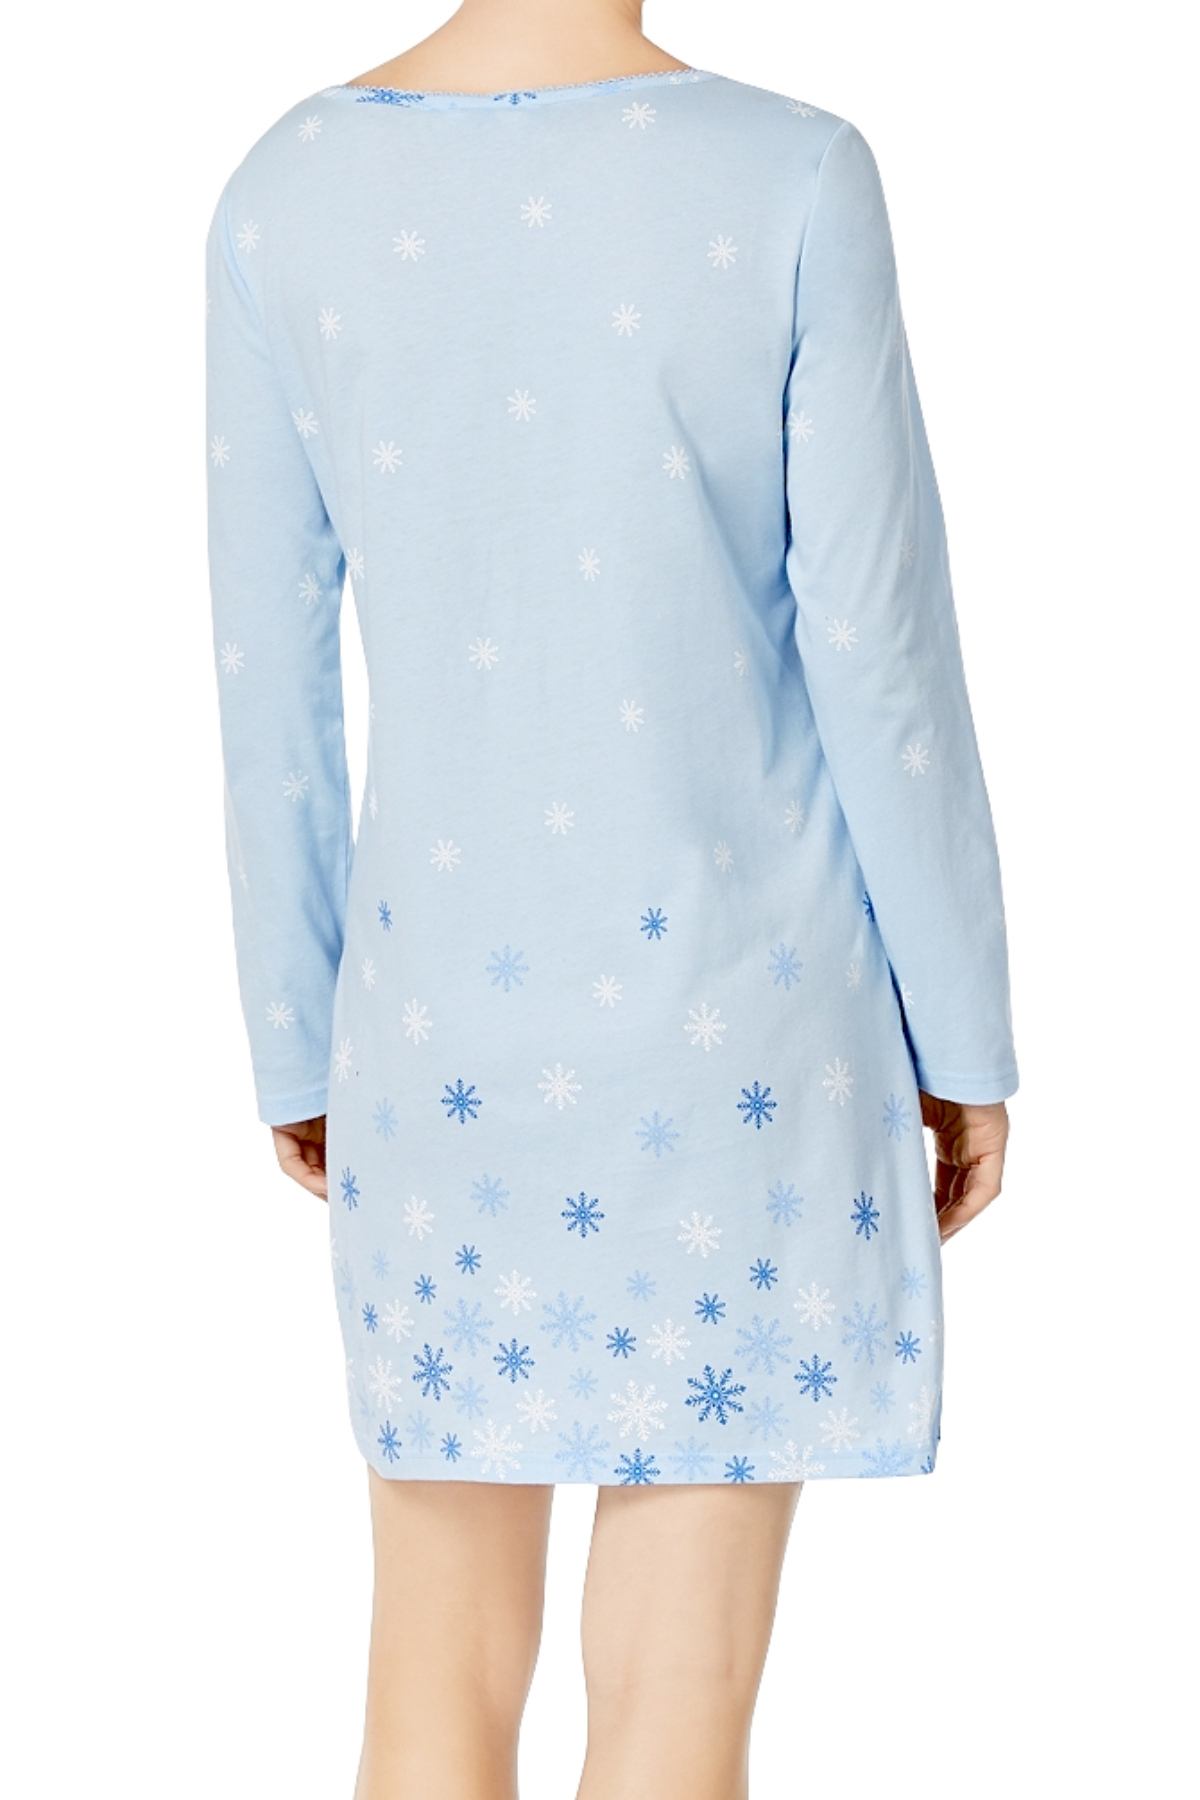 Charter Club Intimates Blue Snowflake Graphic-Print Cotton Sleepshirt